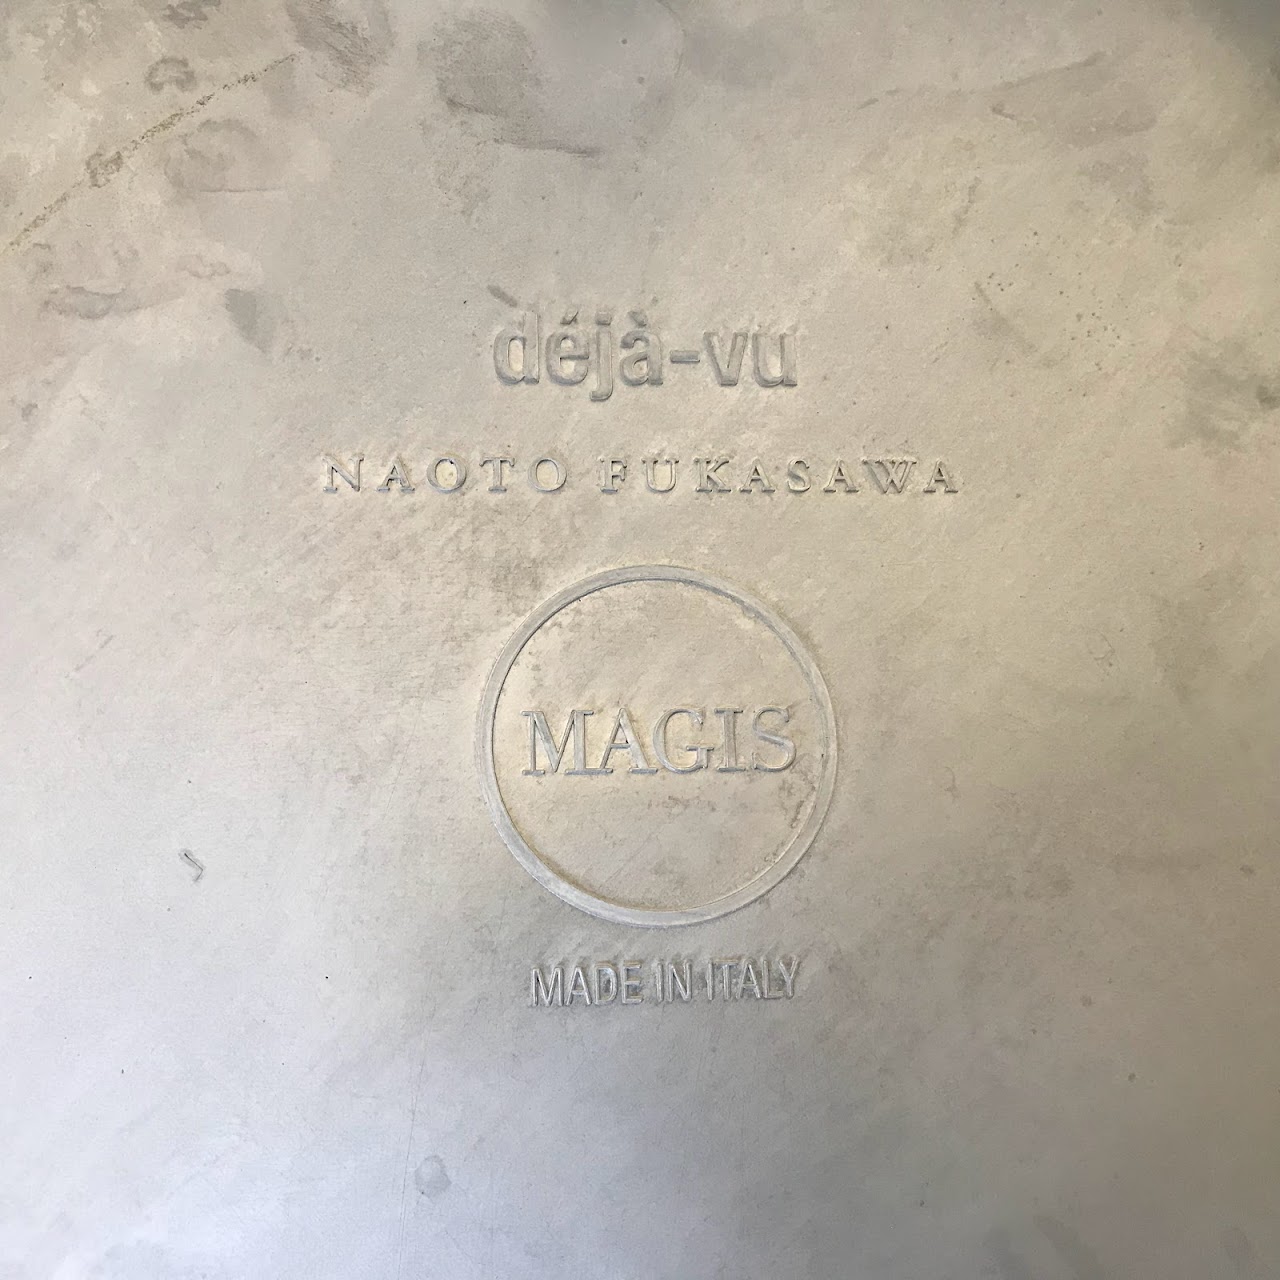 Magis + Naoto Fukasawa Déjà-Vu Stool